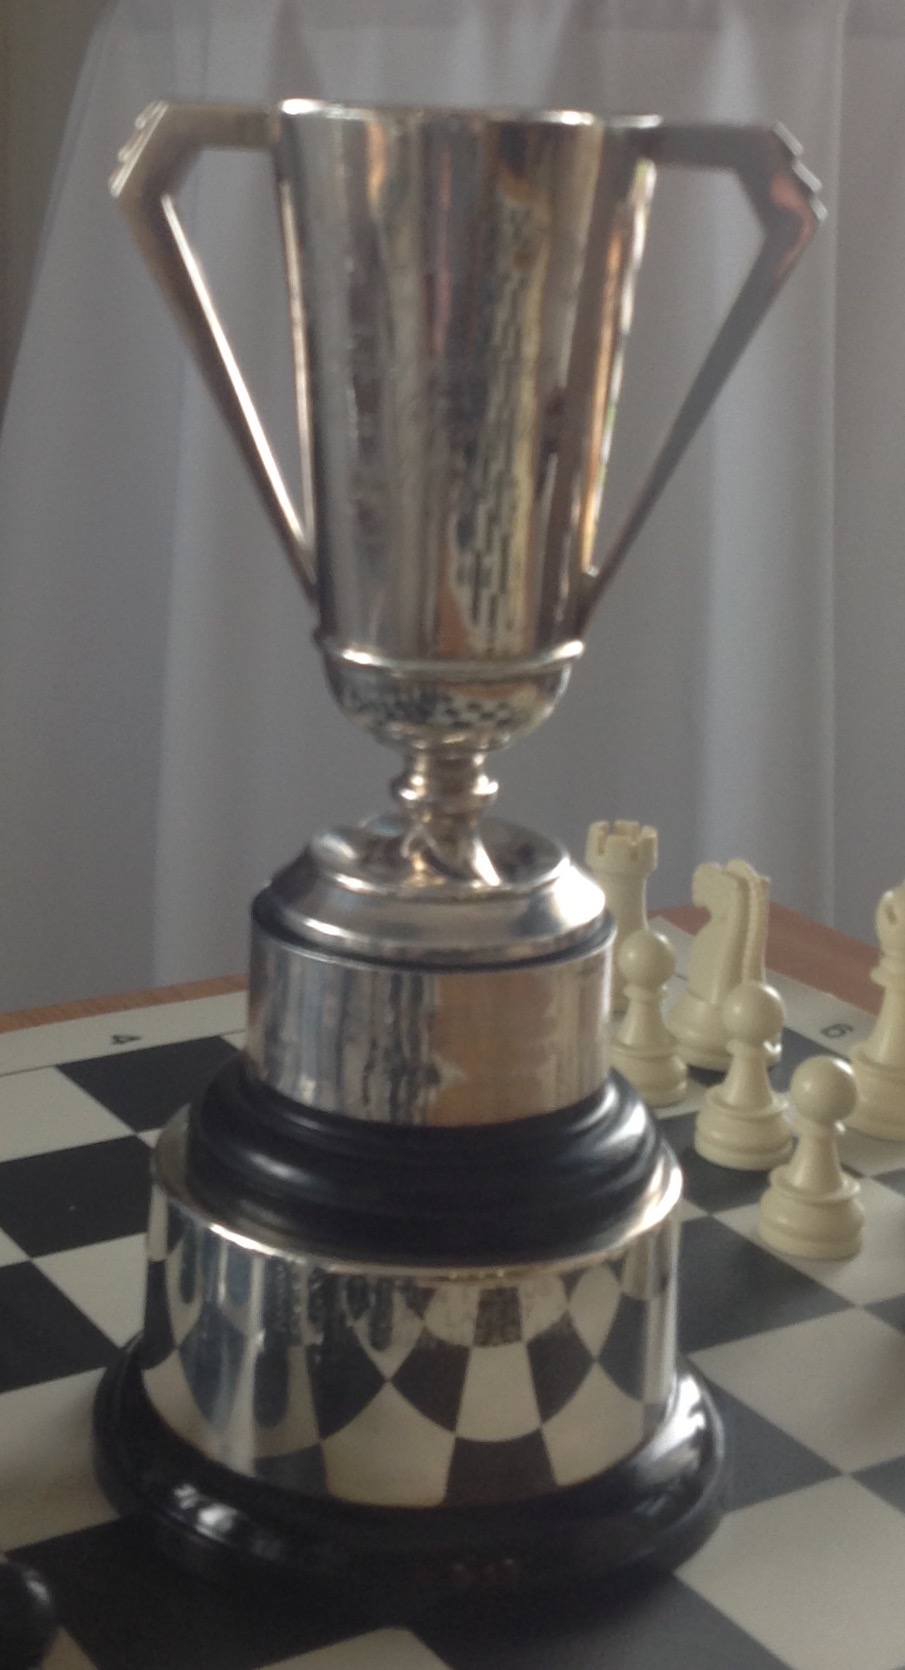 Ulster Intermediate Champion's Trophy